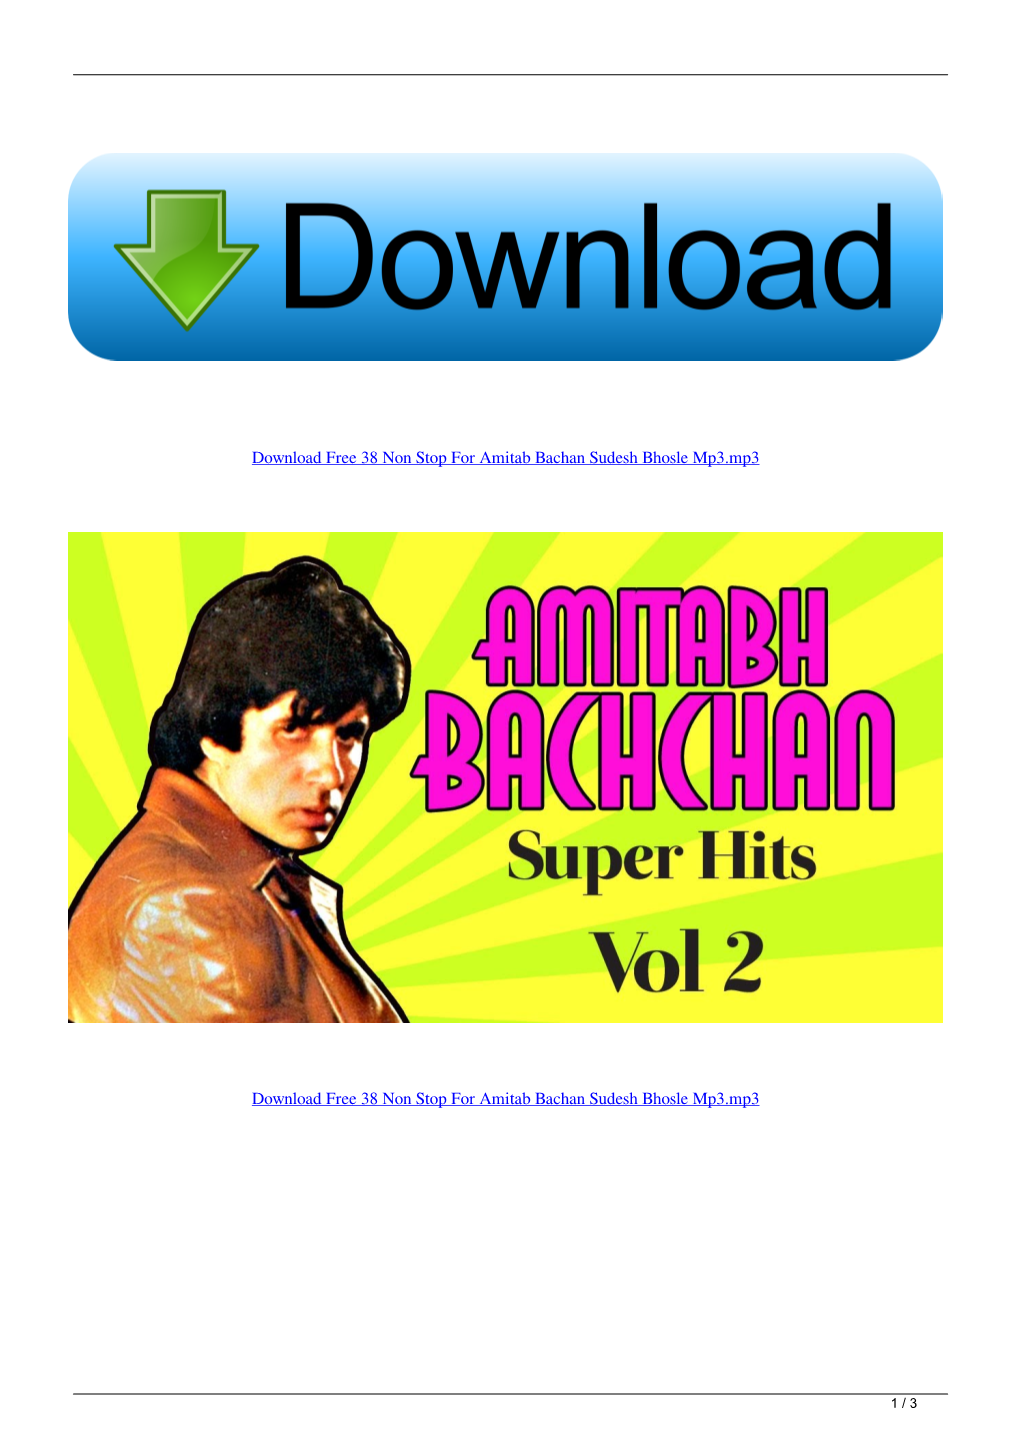 Download Free 38 Non Stop for Amitab Bachan Sudesh Bhosle Mp3.Mp3